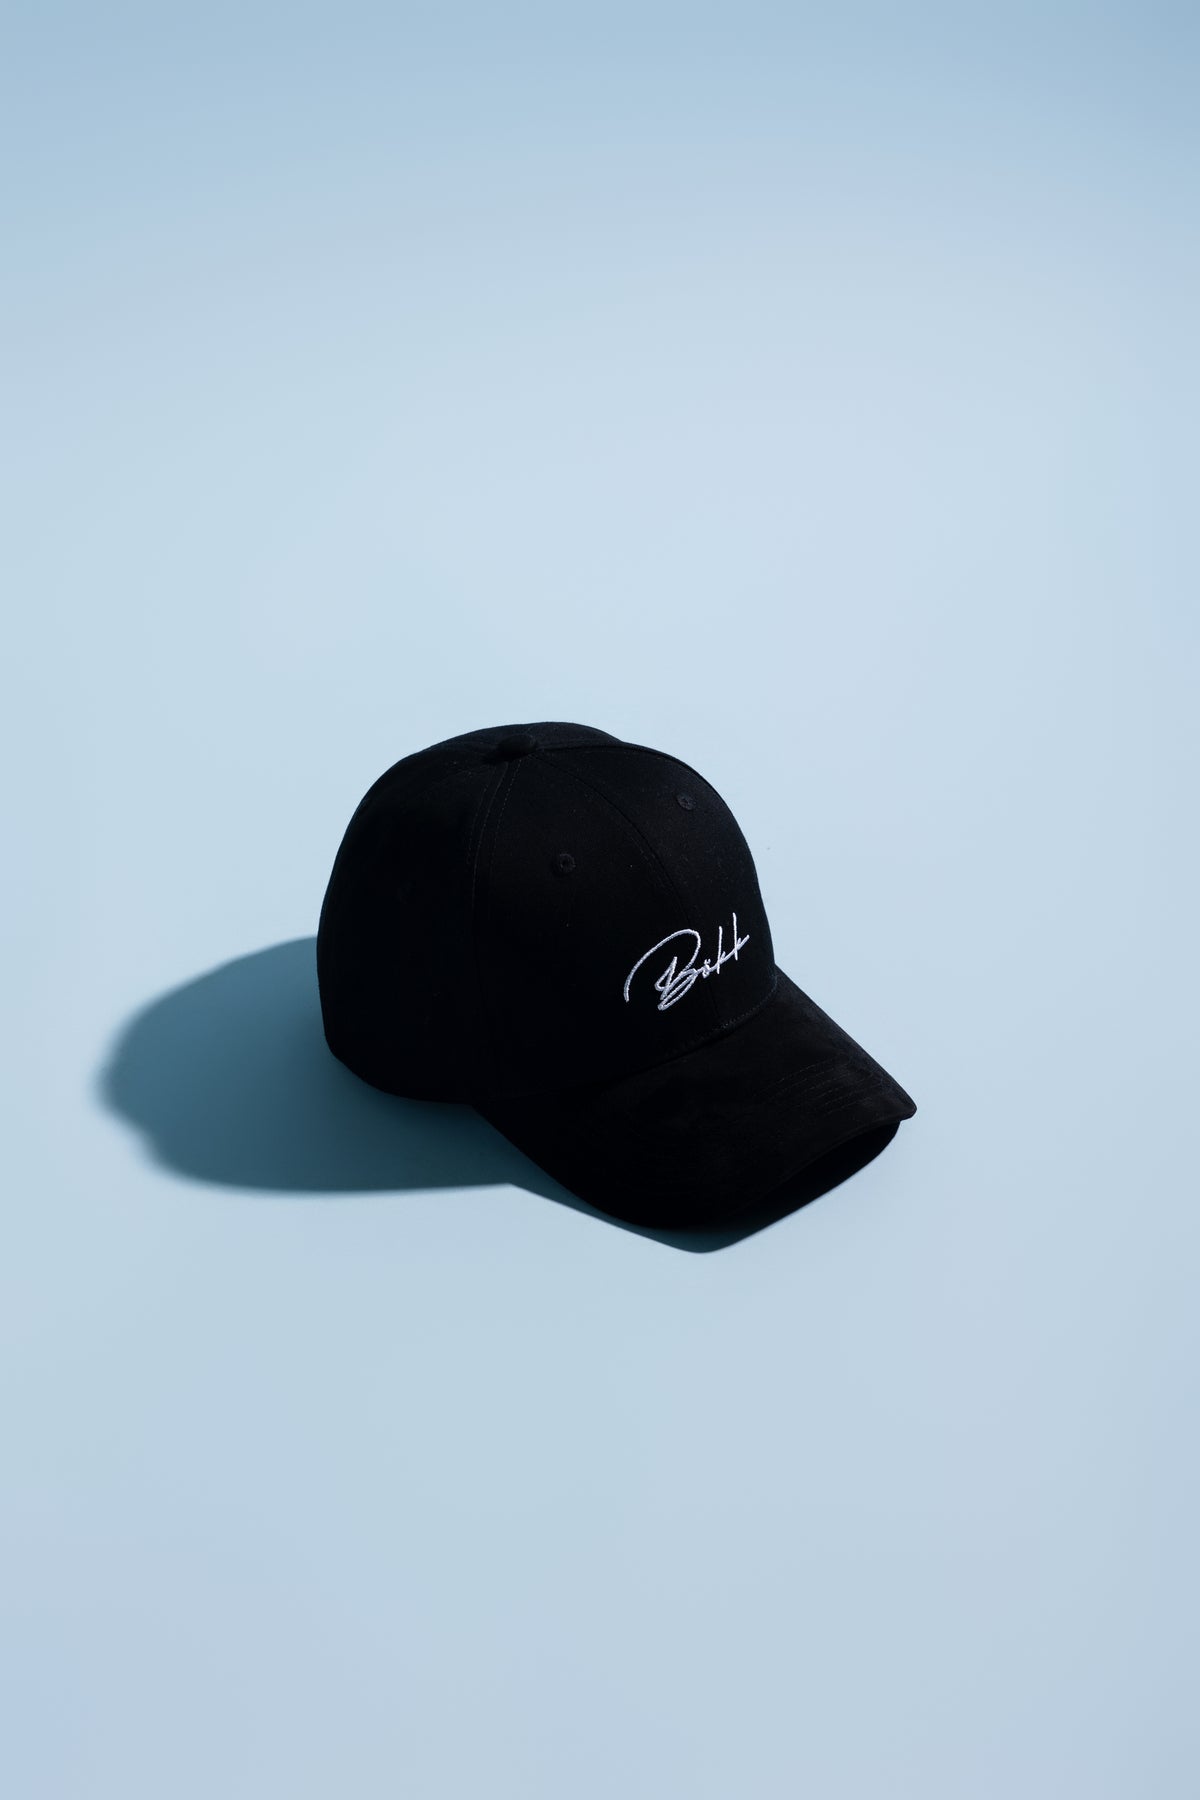 New Cap in black